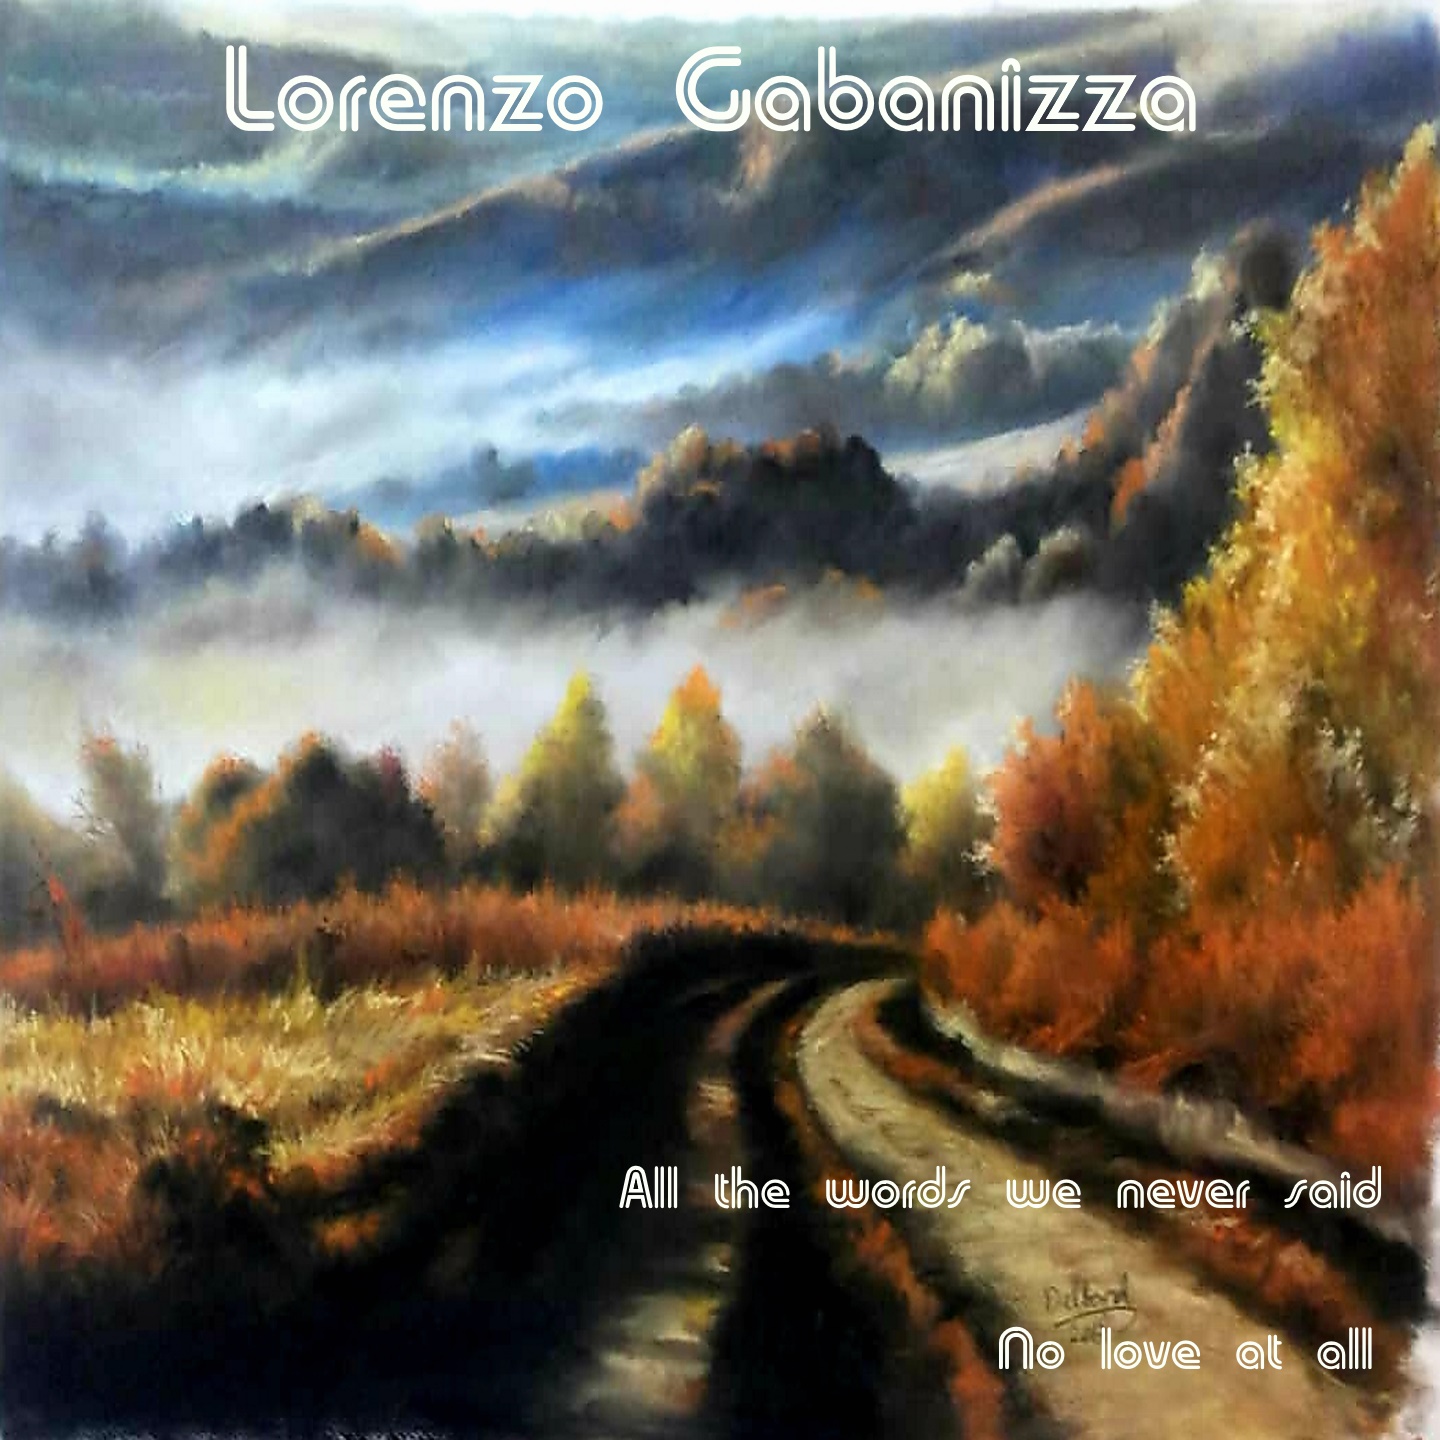  LORENZO GABANIZZA AND THE WORDS HE NEVER SAID